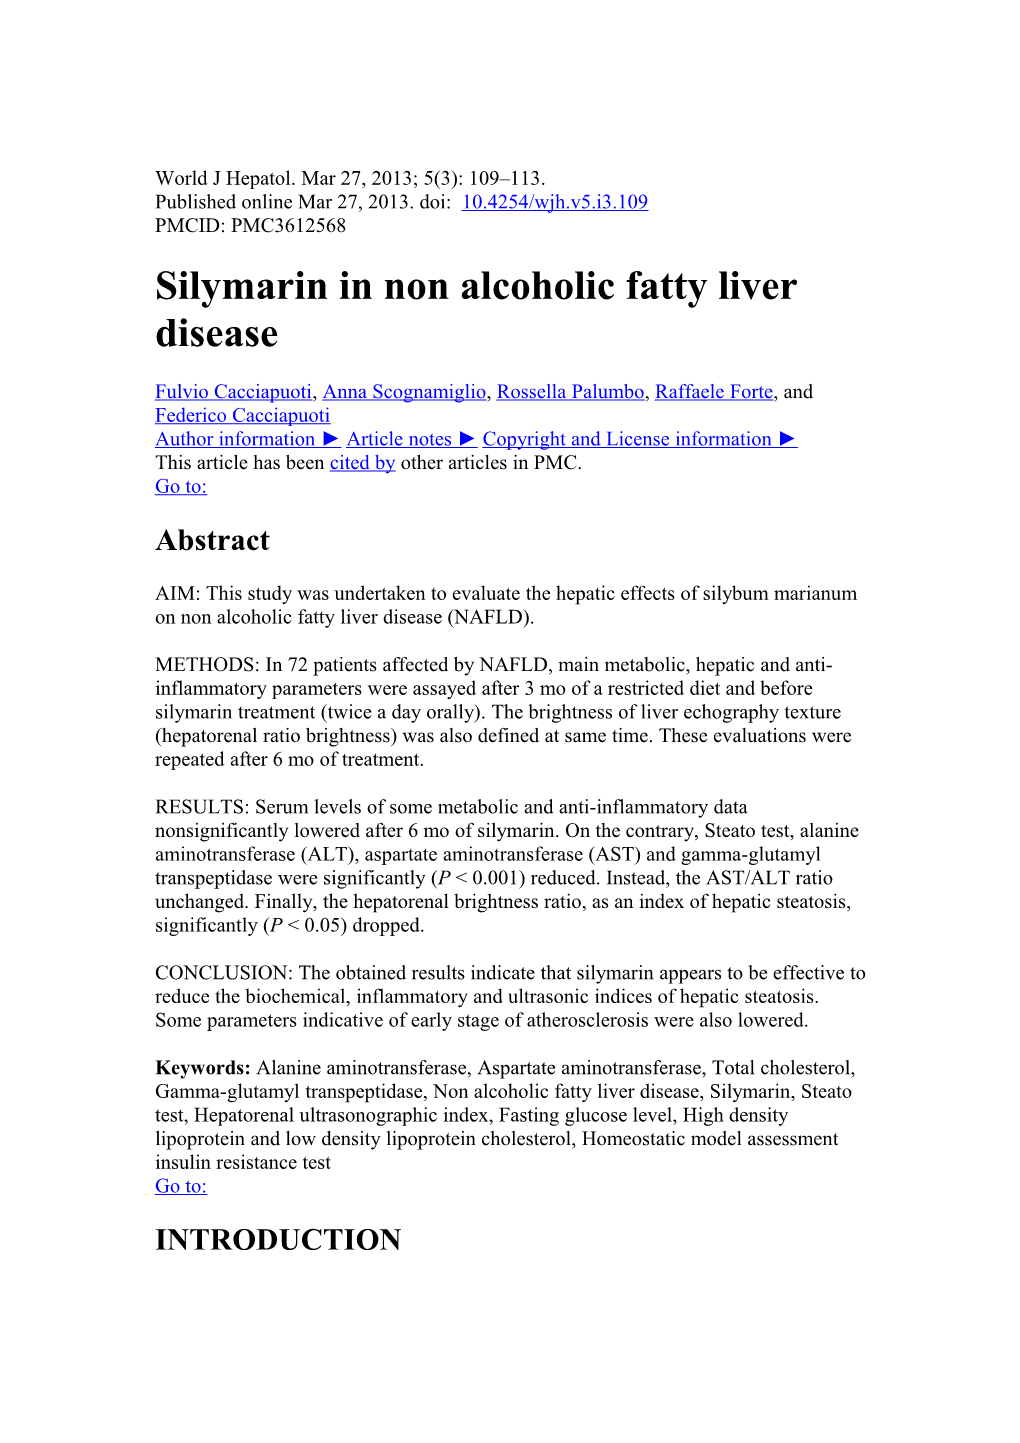 Silymarin in Non Alcoholic Fatty Liver Disease